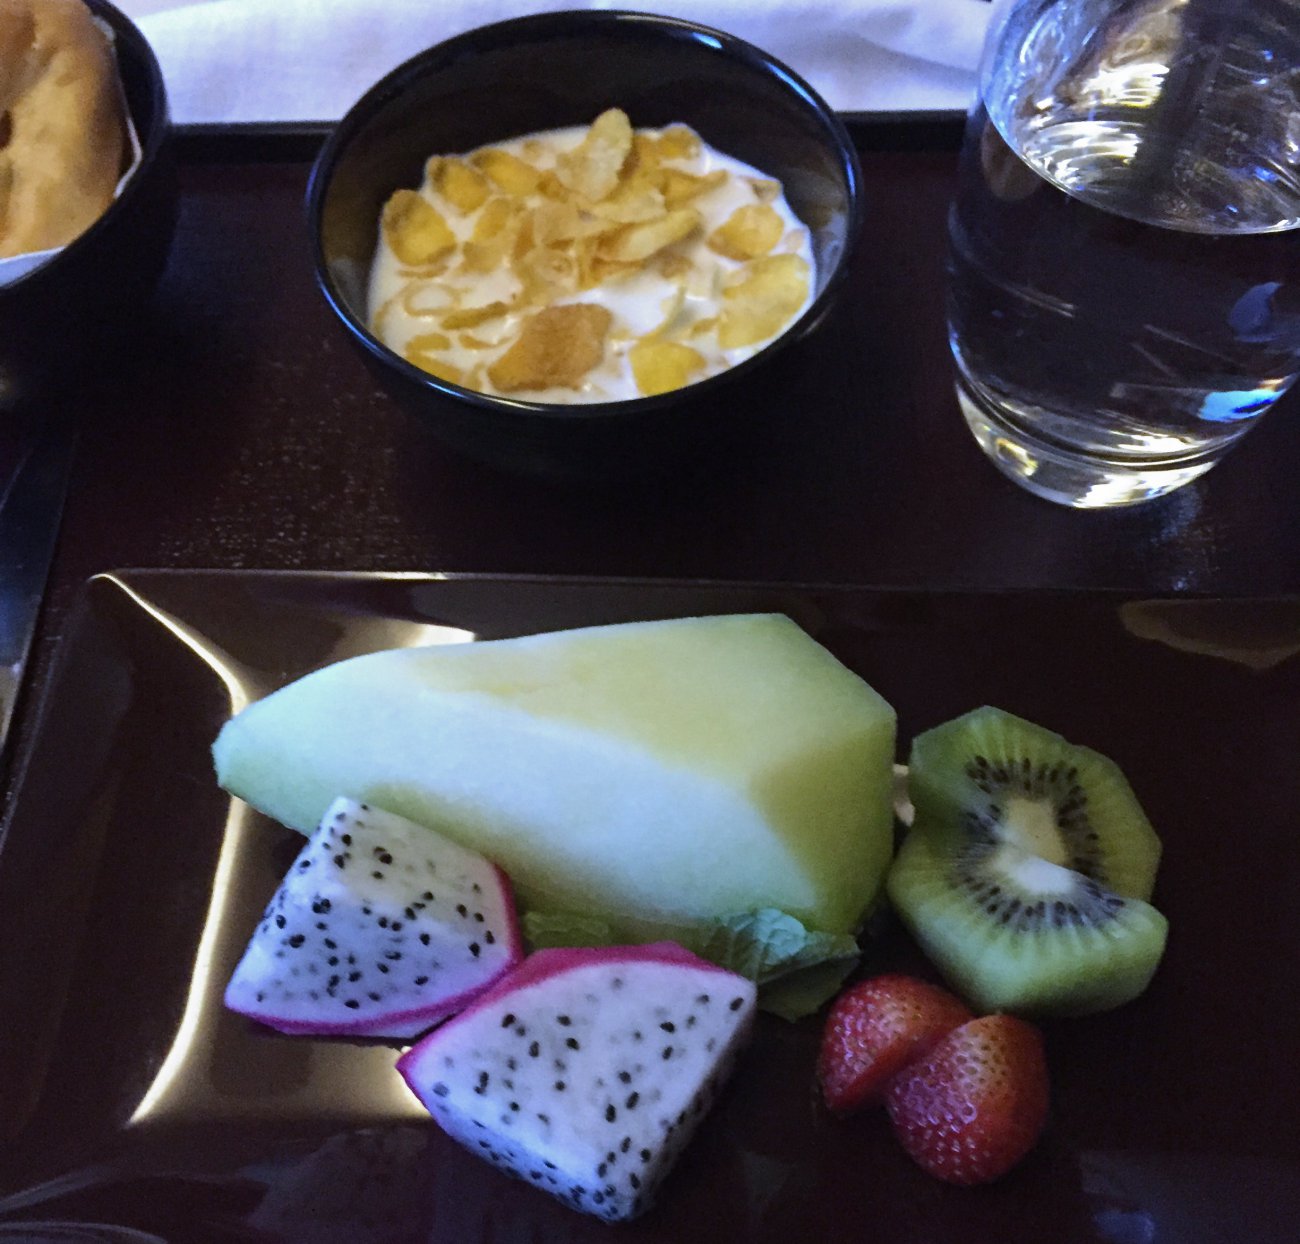 Review-Garuda Business Class Breakfast-Fruit-Cereal